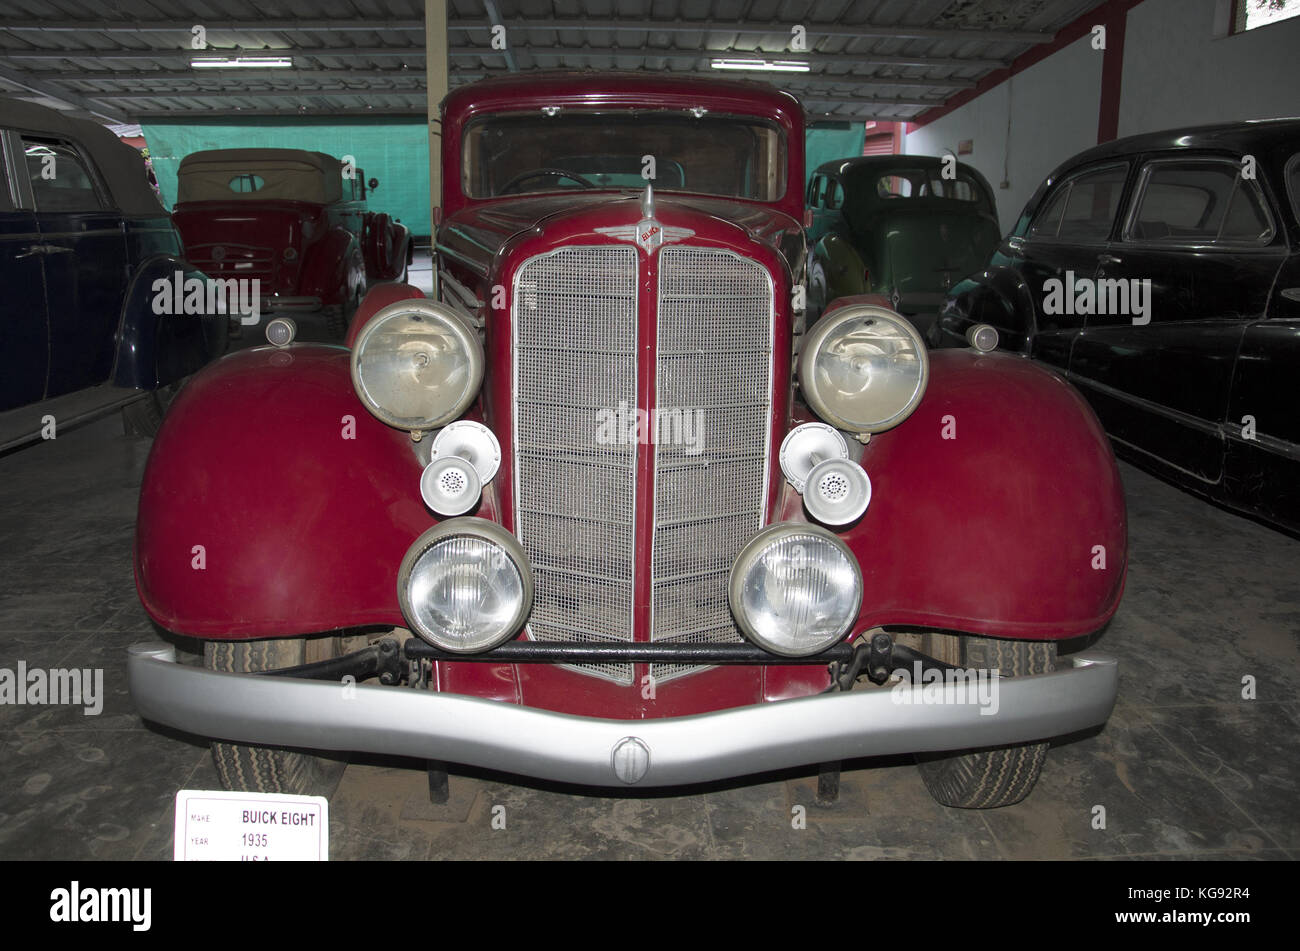 Buick Eight (Year 1935),  USA. Auto world vintage car museum, Ahmedabad, Gujarat, India Stock Photo